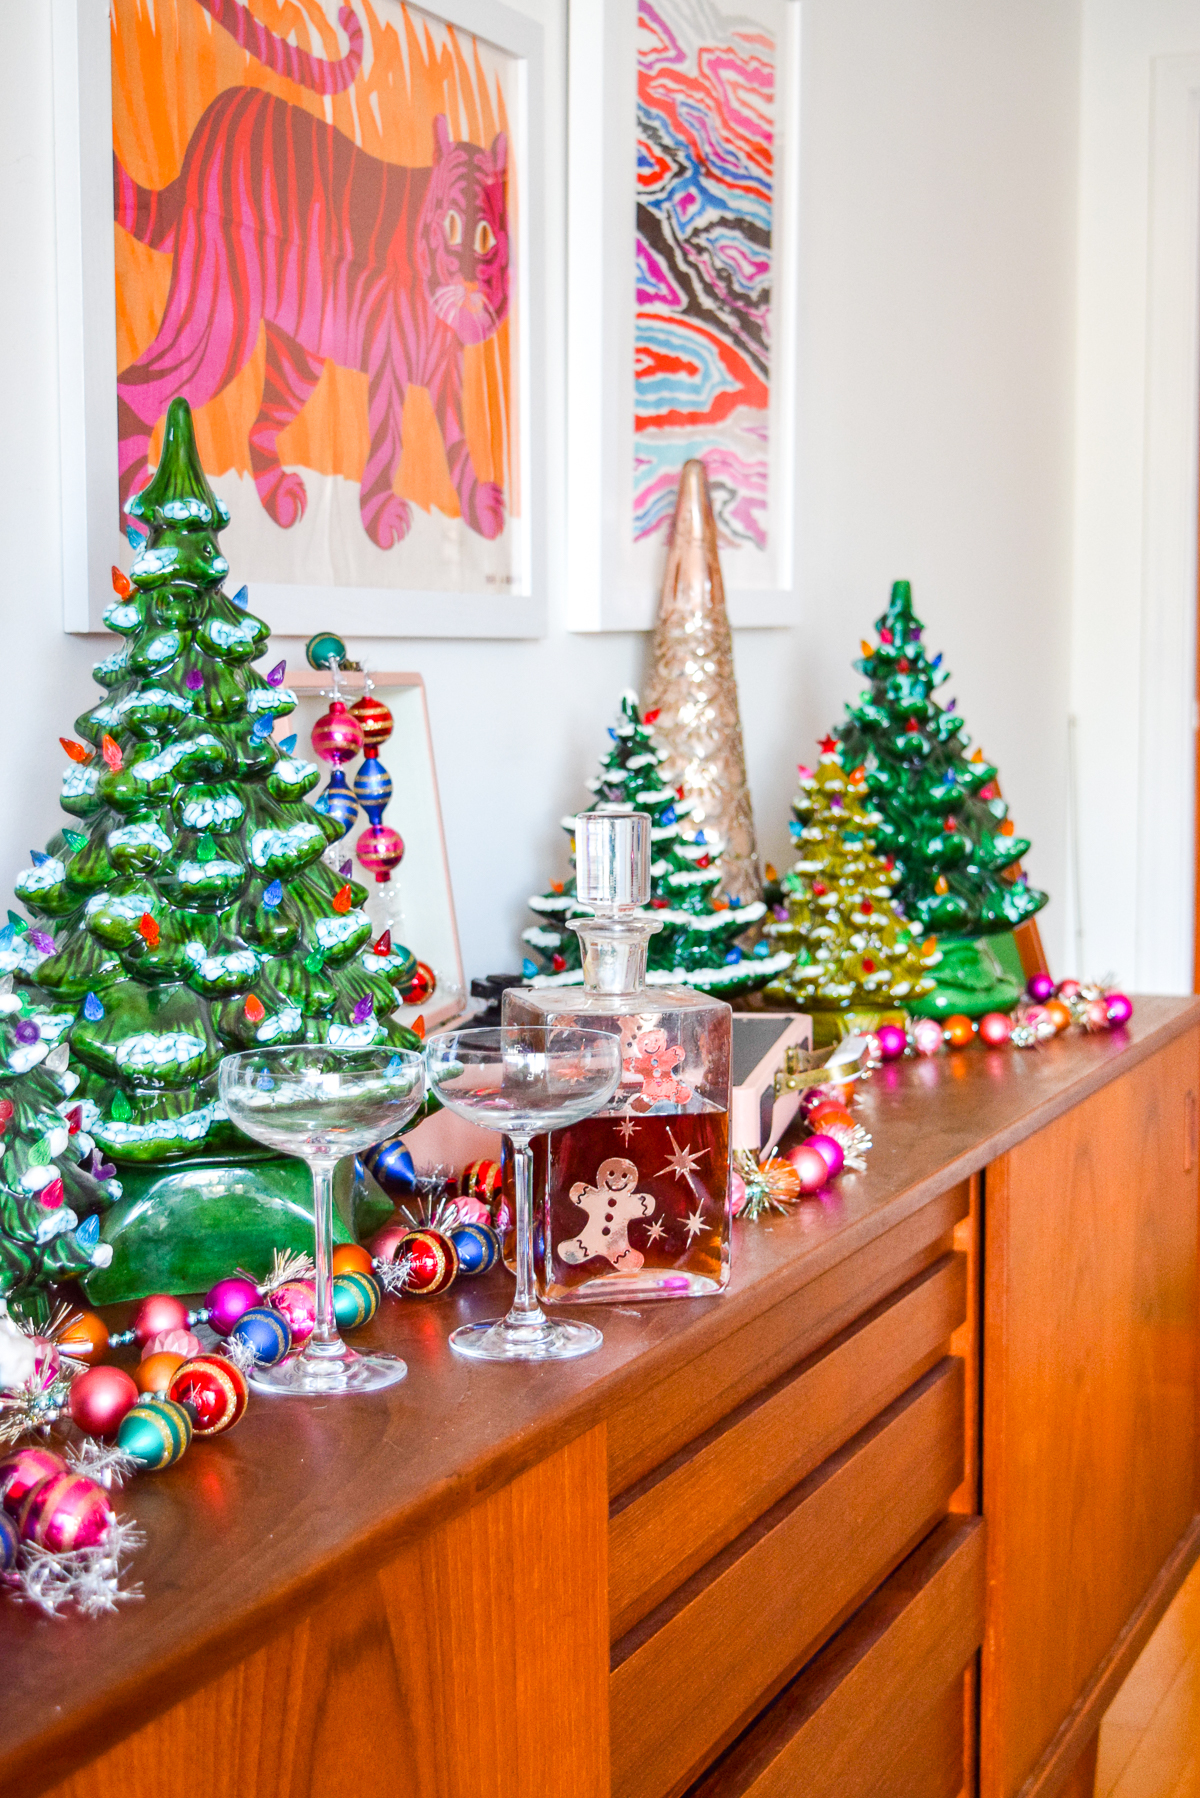 Christmas tree O' Christmas tree! I love me some retro Christmas decor. And if you do too, you'll love my ceramic Christmas tree sideboard display. #ceramictree #retrochristmas 